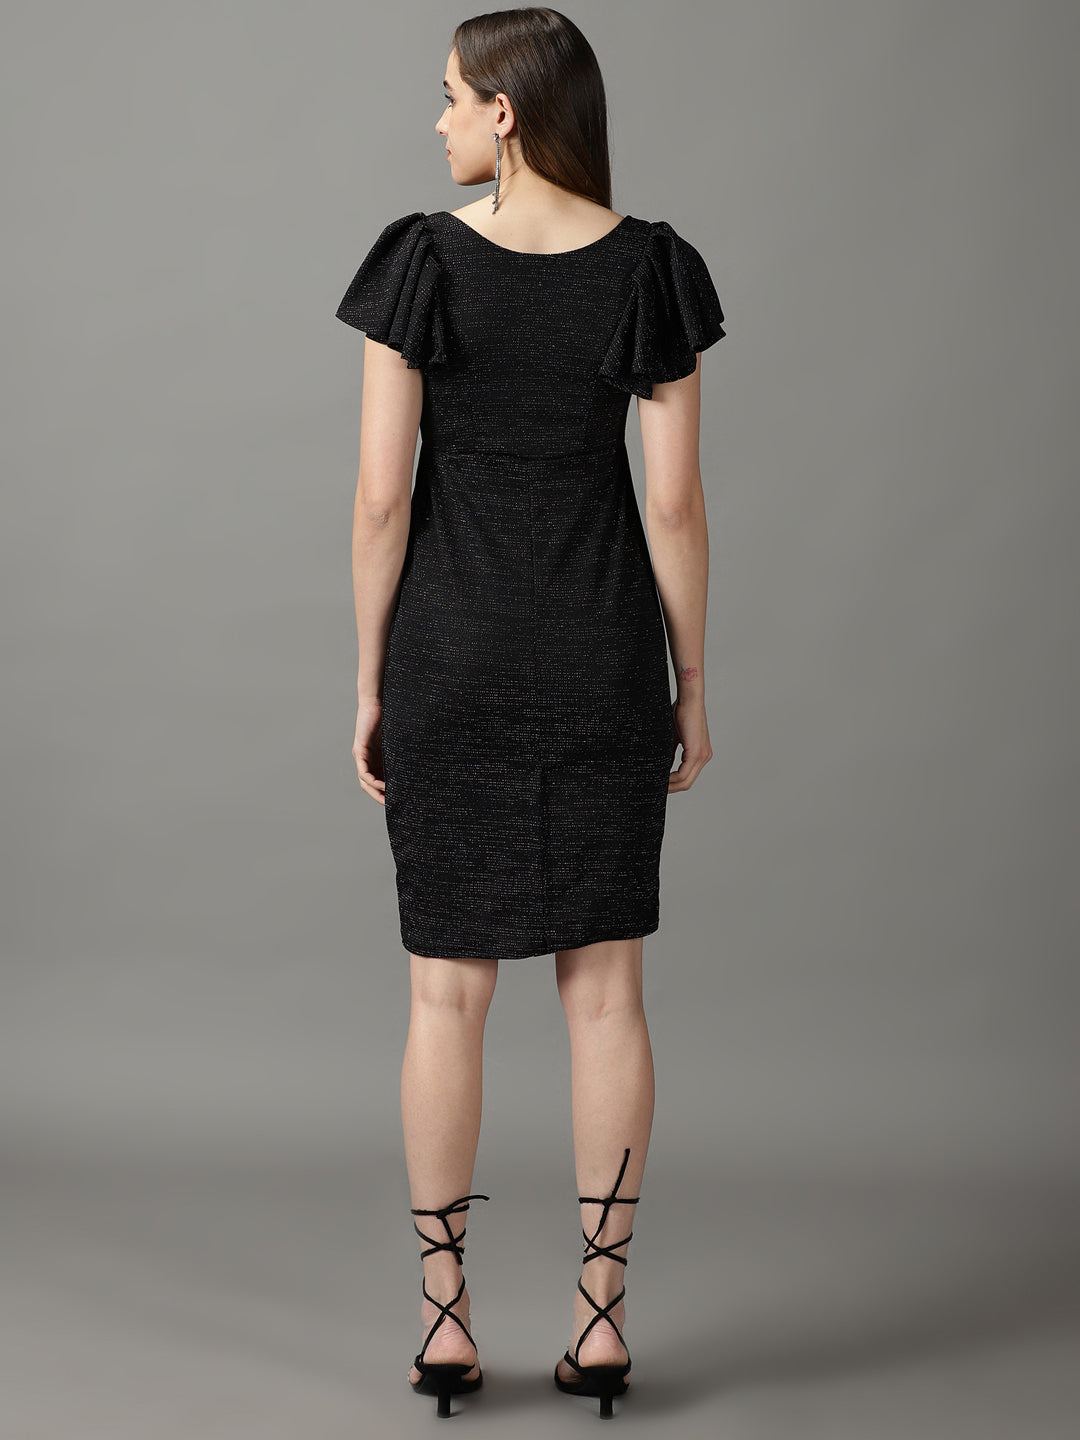 Women's Black Embellished Bodycon Dress